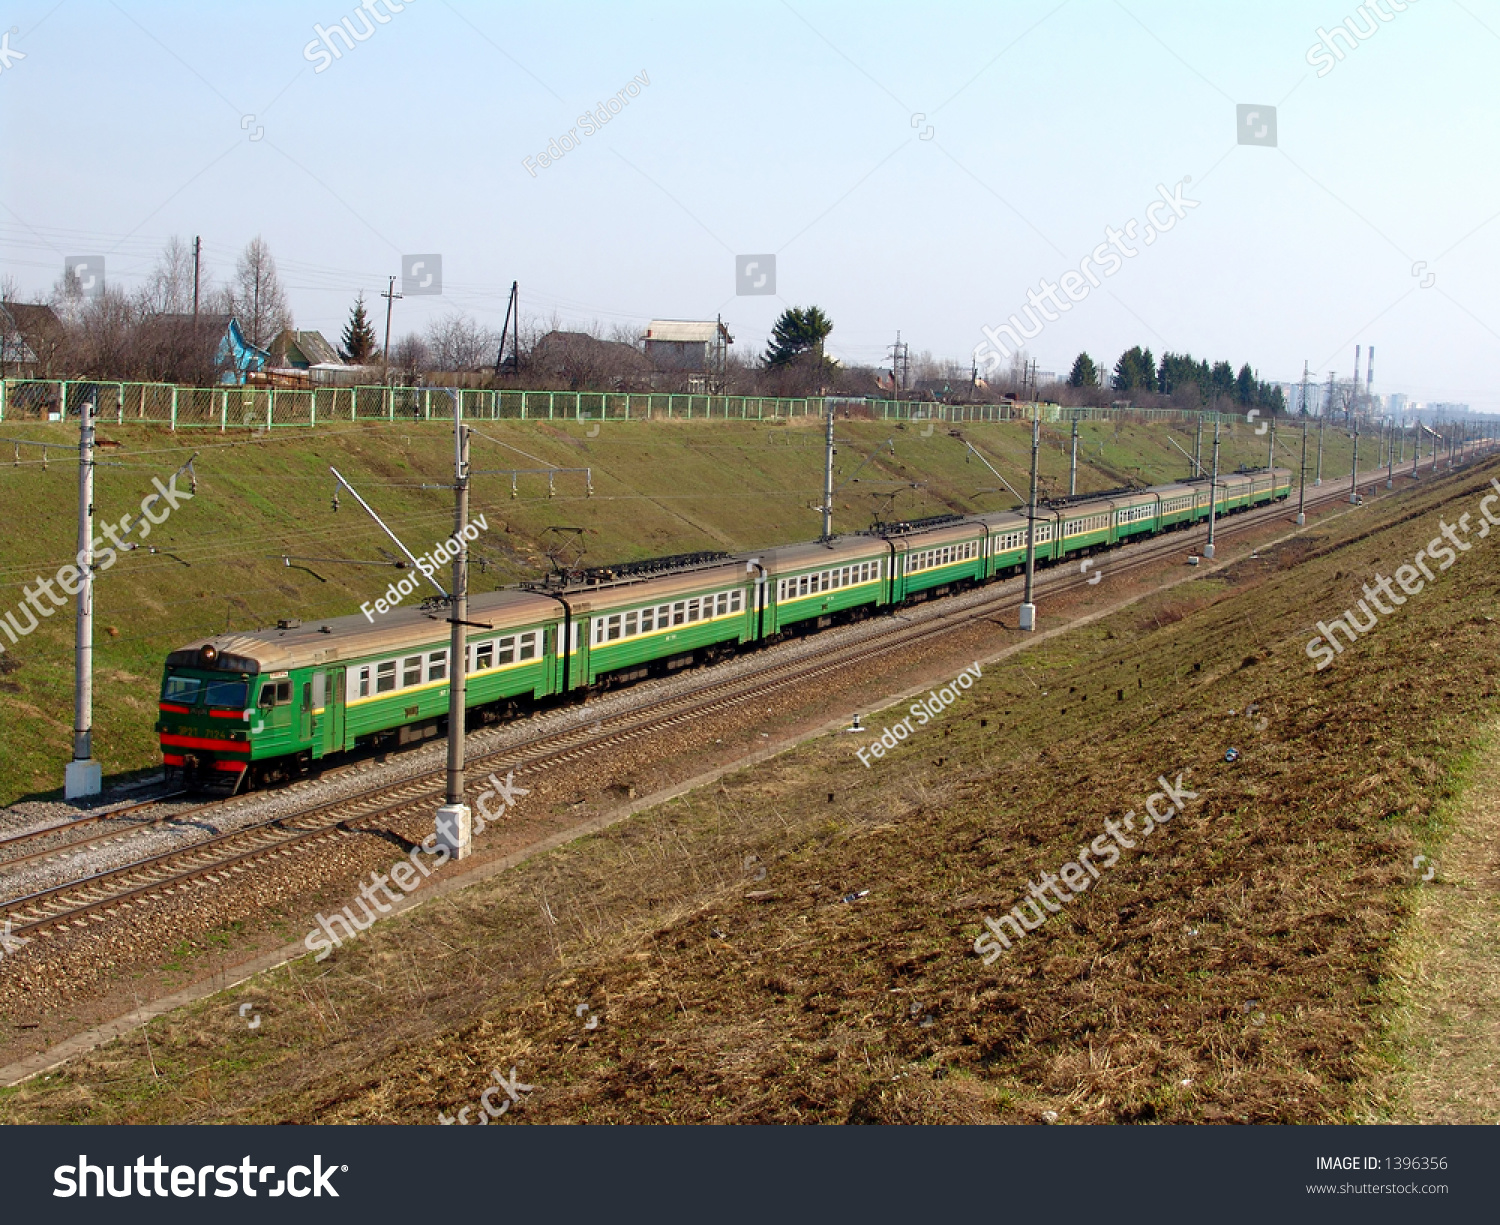 A generic suburban train in full length #1396356